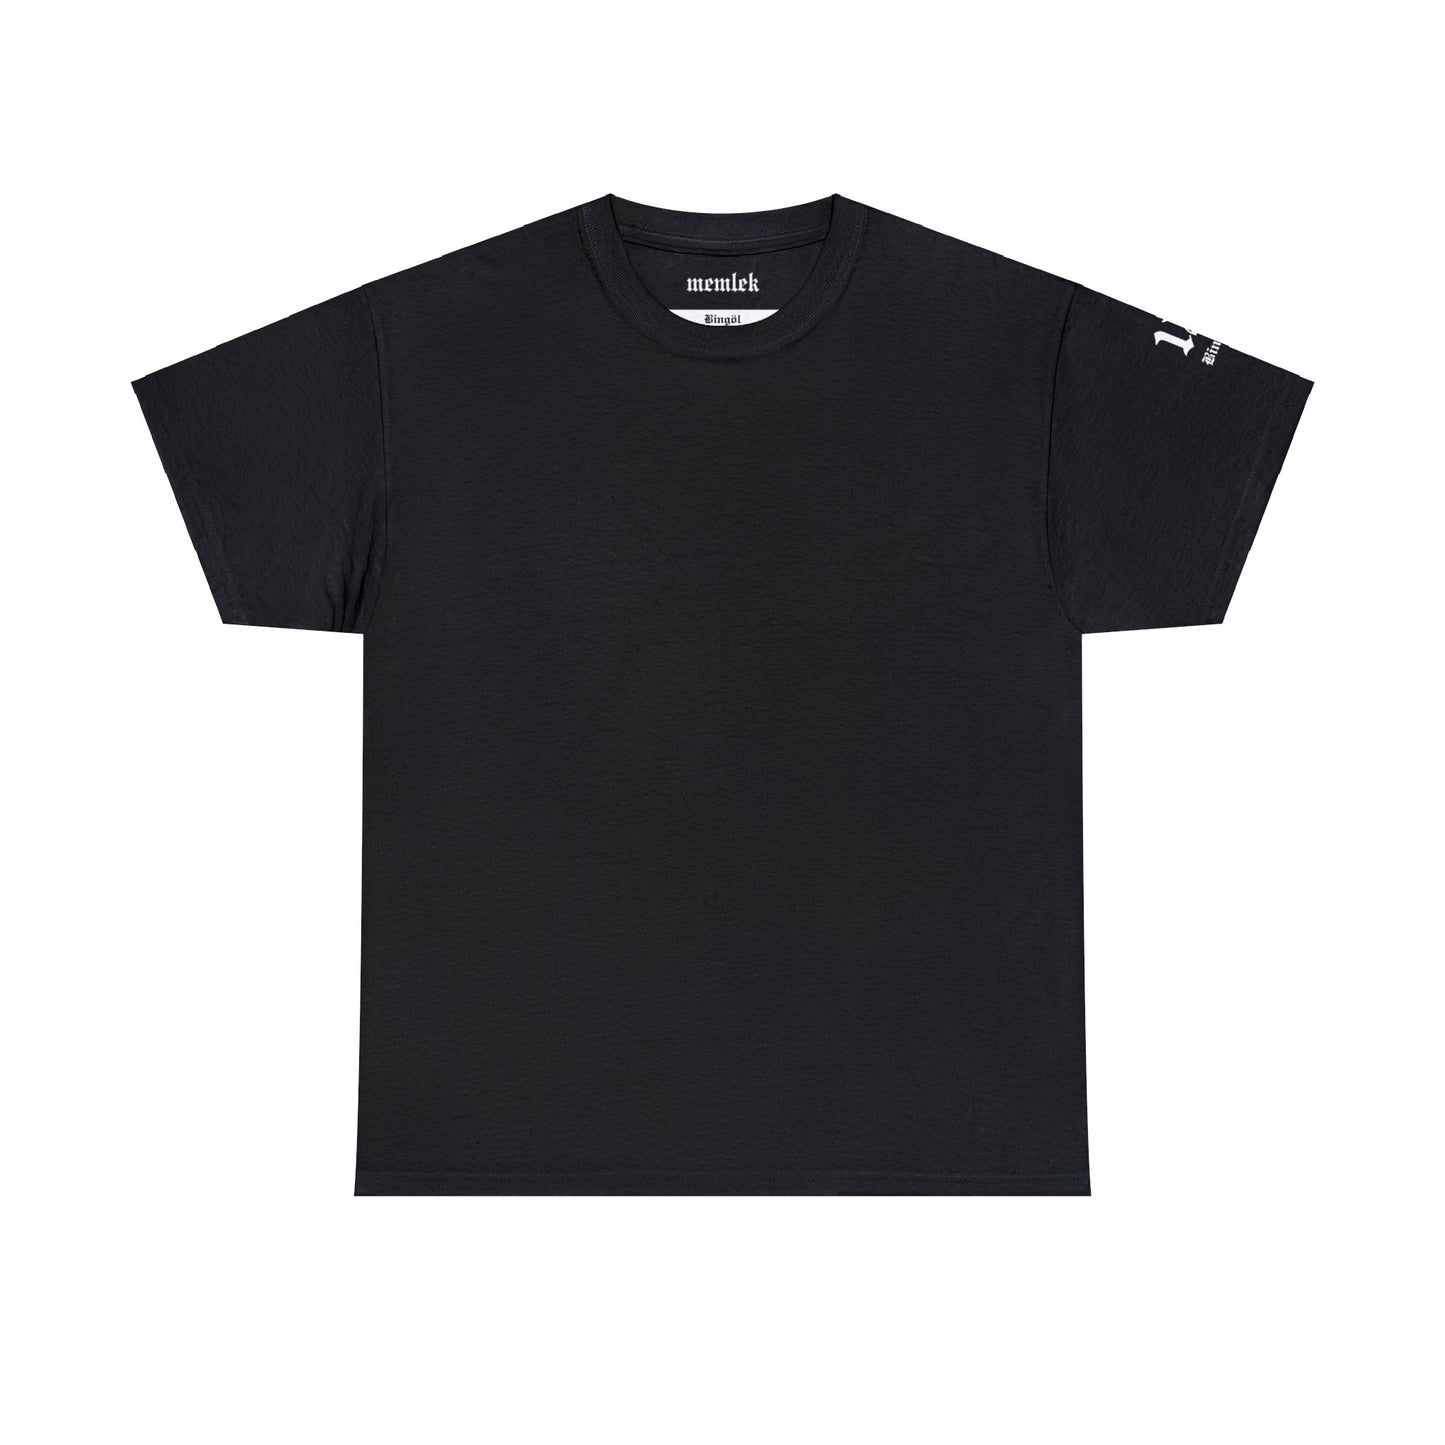 İlçem - 12 Bingöl - T-Shirt - Back Print - Black